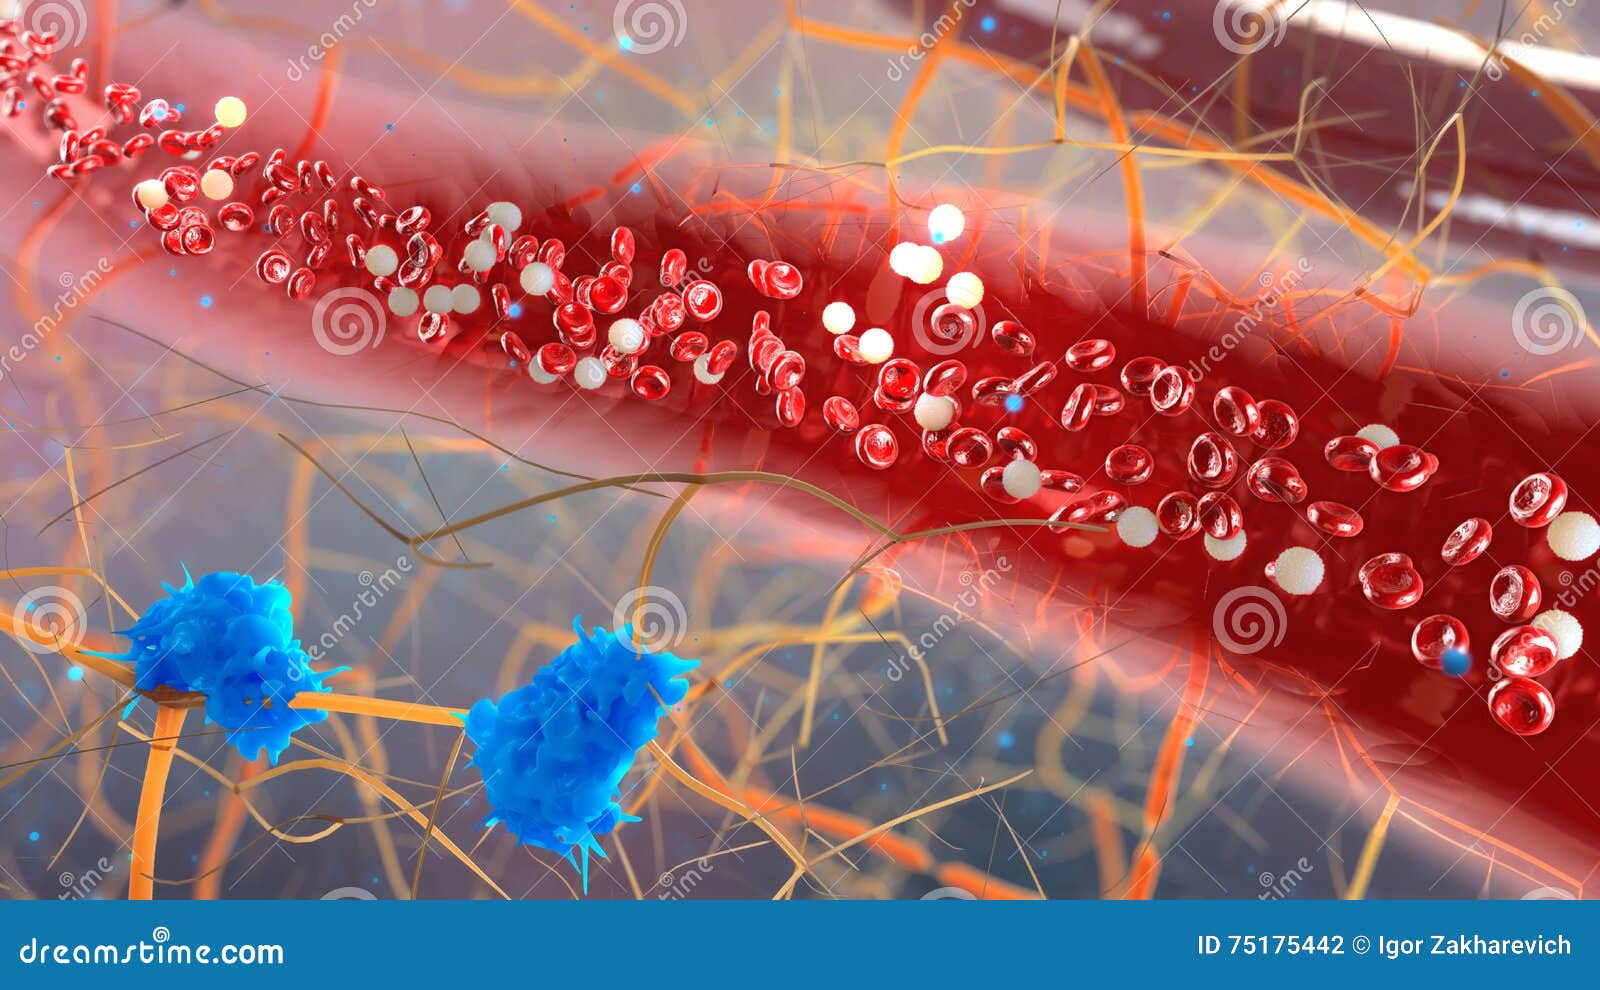 inside the blood vessel, white blood cells inside